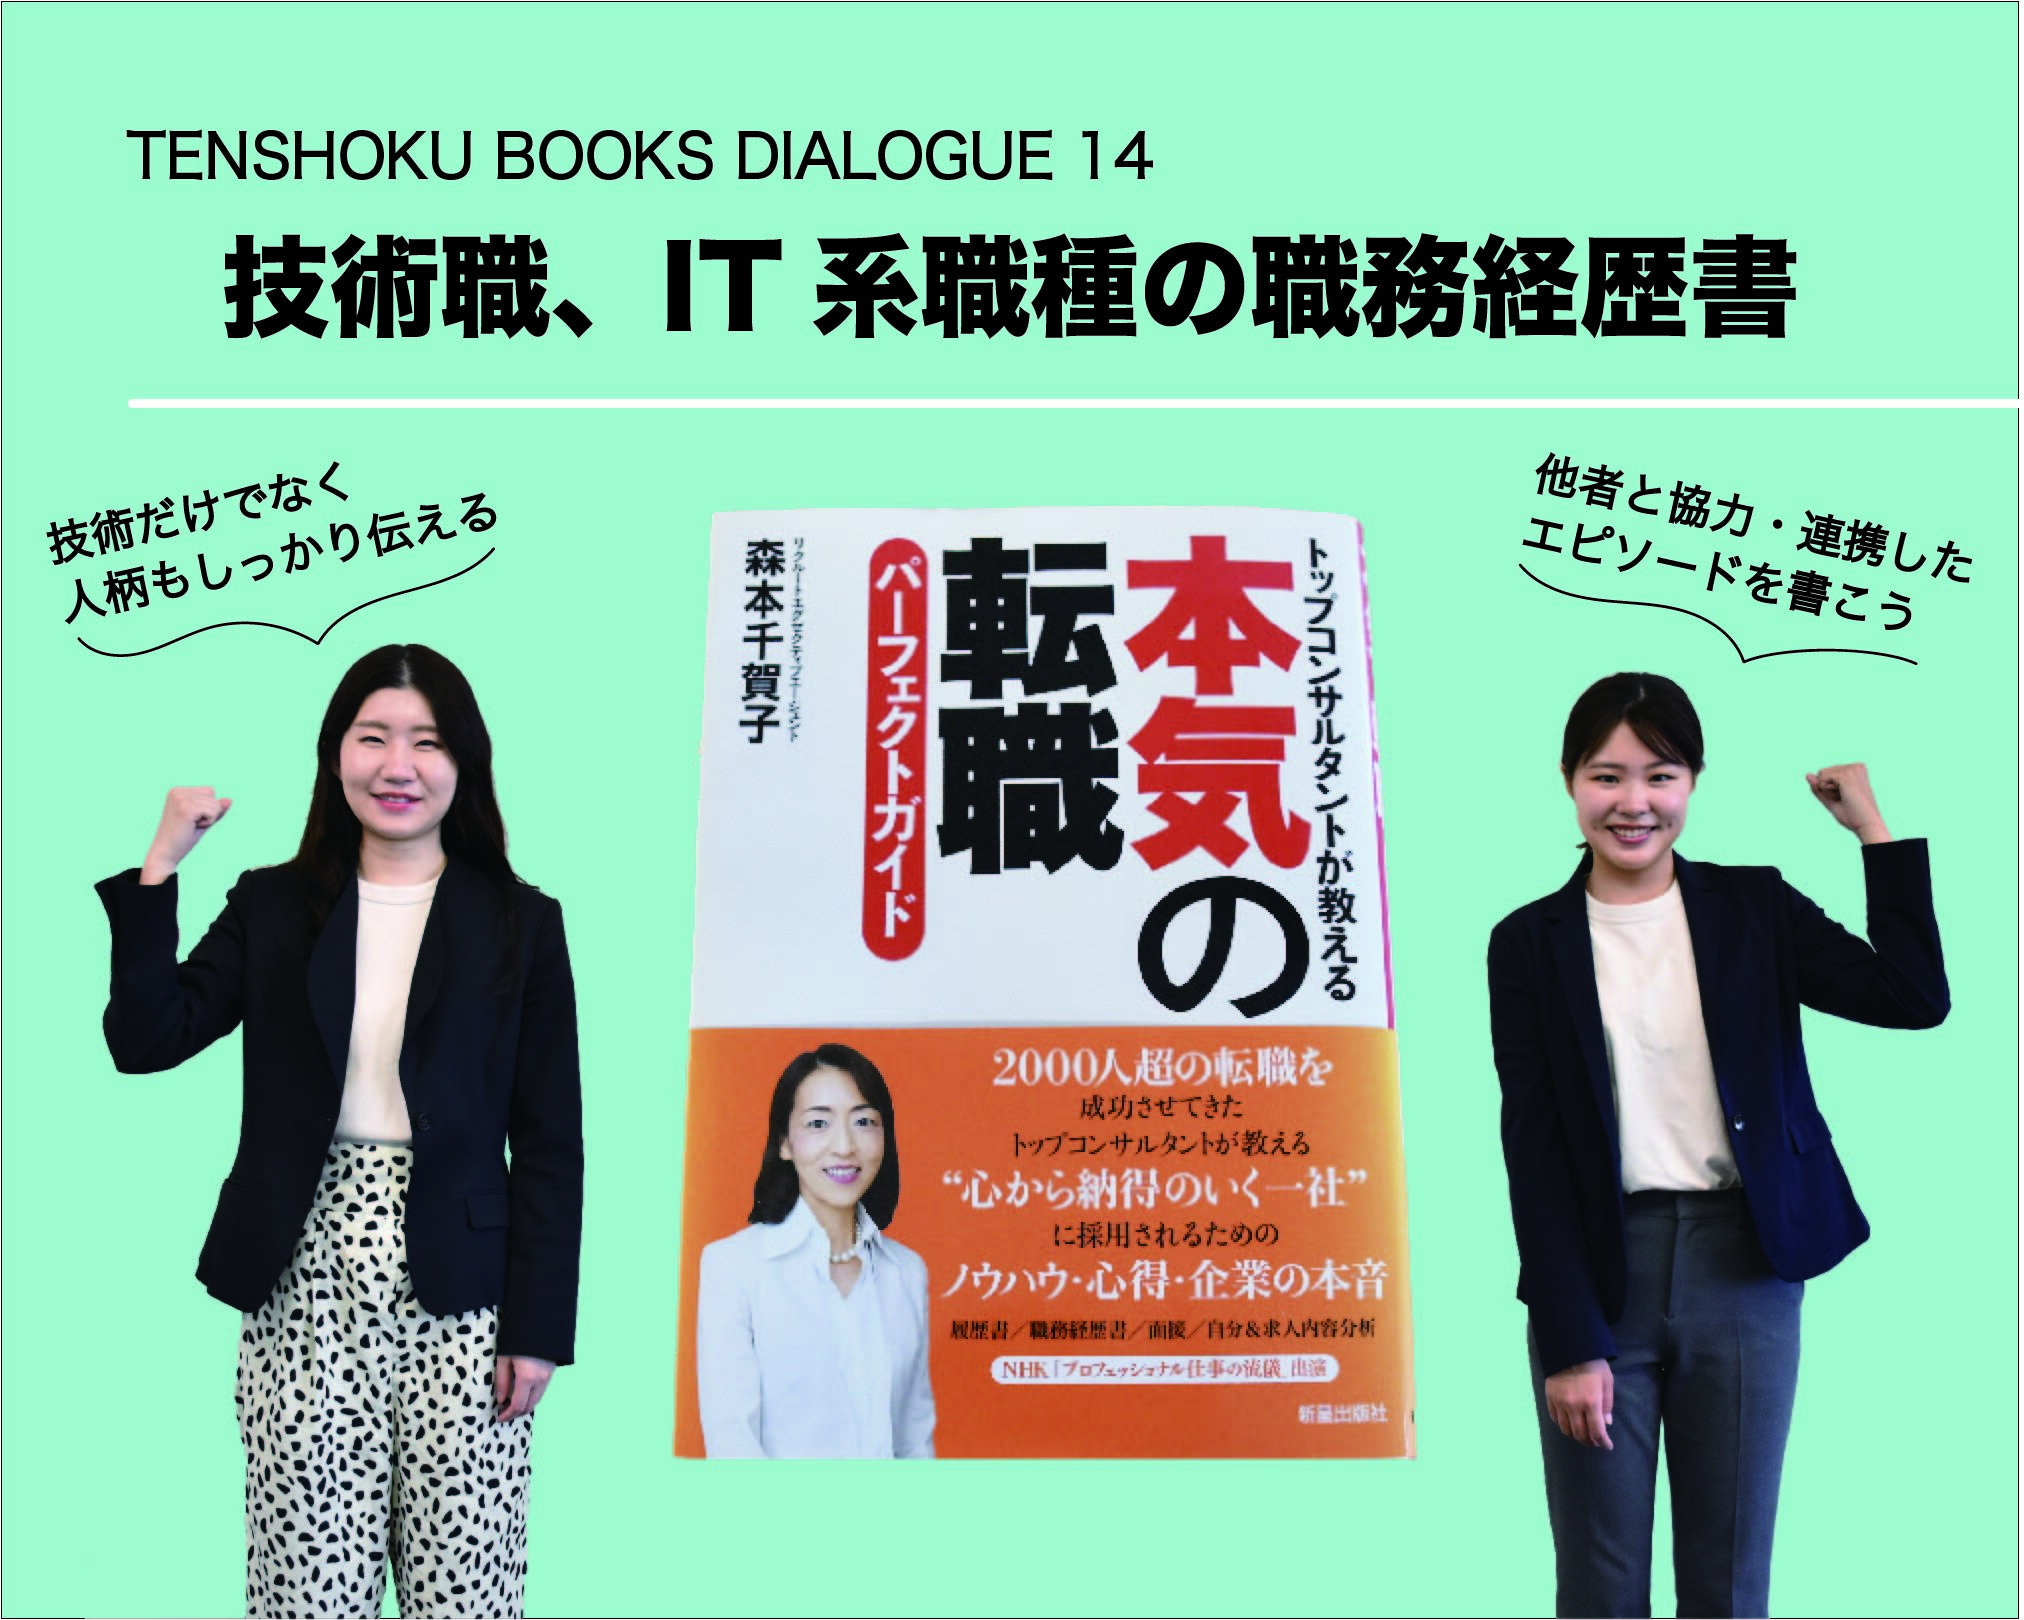 【TENSHOKU BOOKS DIALOGUE14】 『本気の転職パーフェクトガイド』から考える職種別の良い職務経歴書(2)